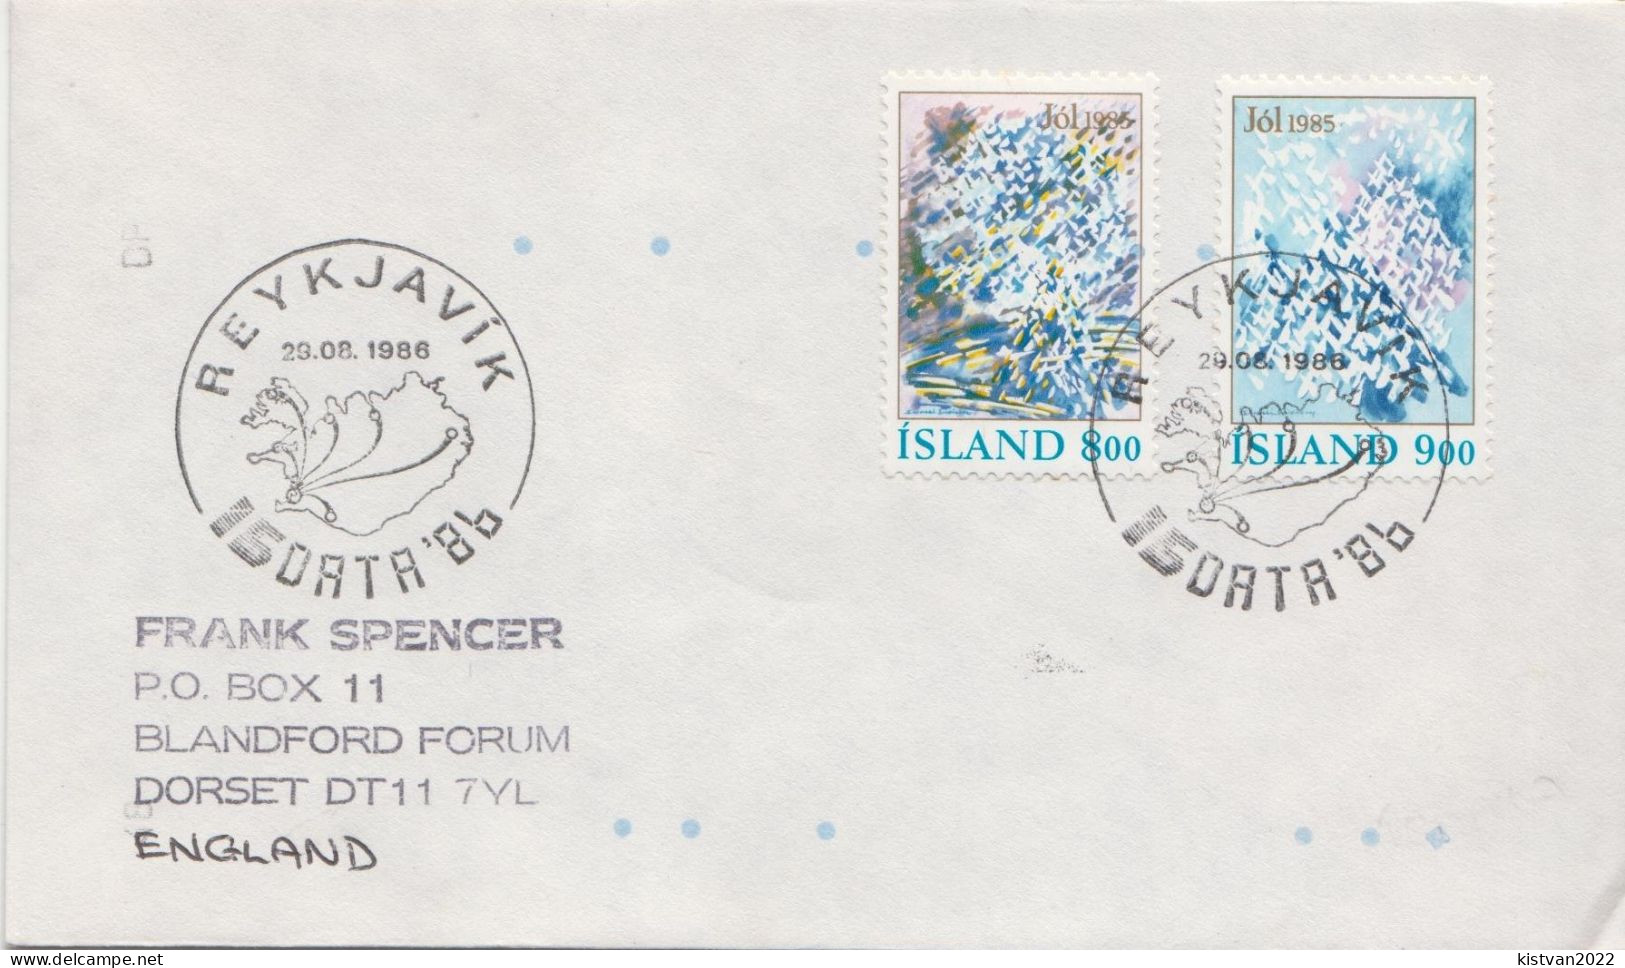 Postal History: Iceland Cover - Storia Postale